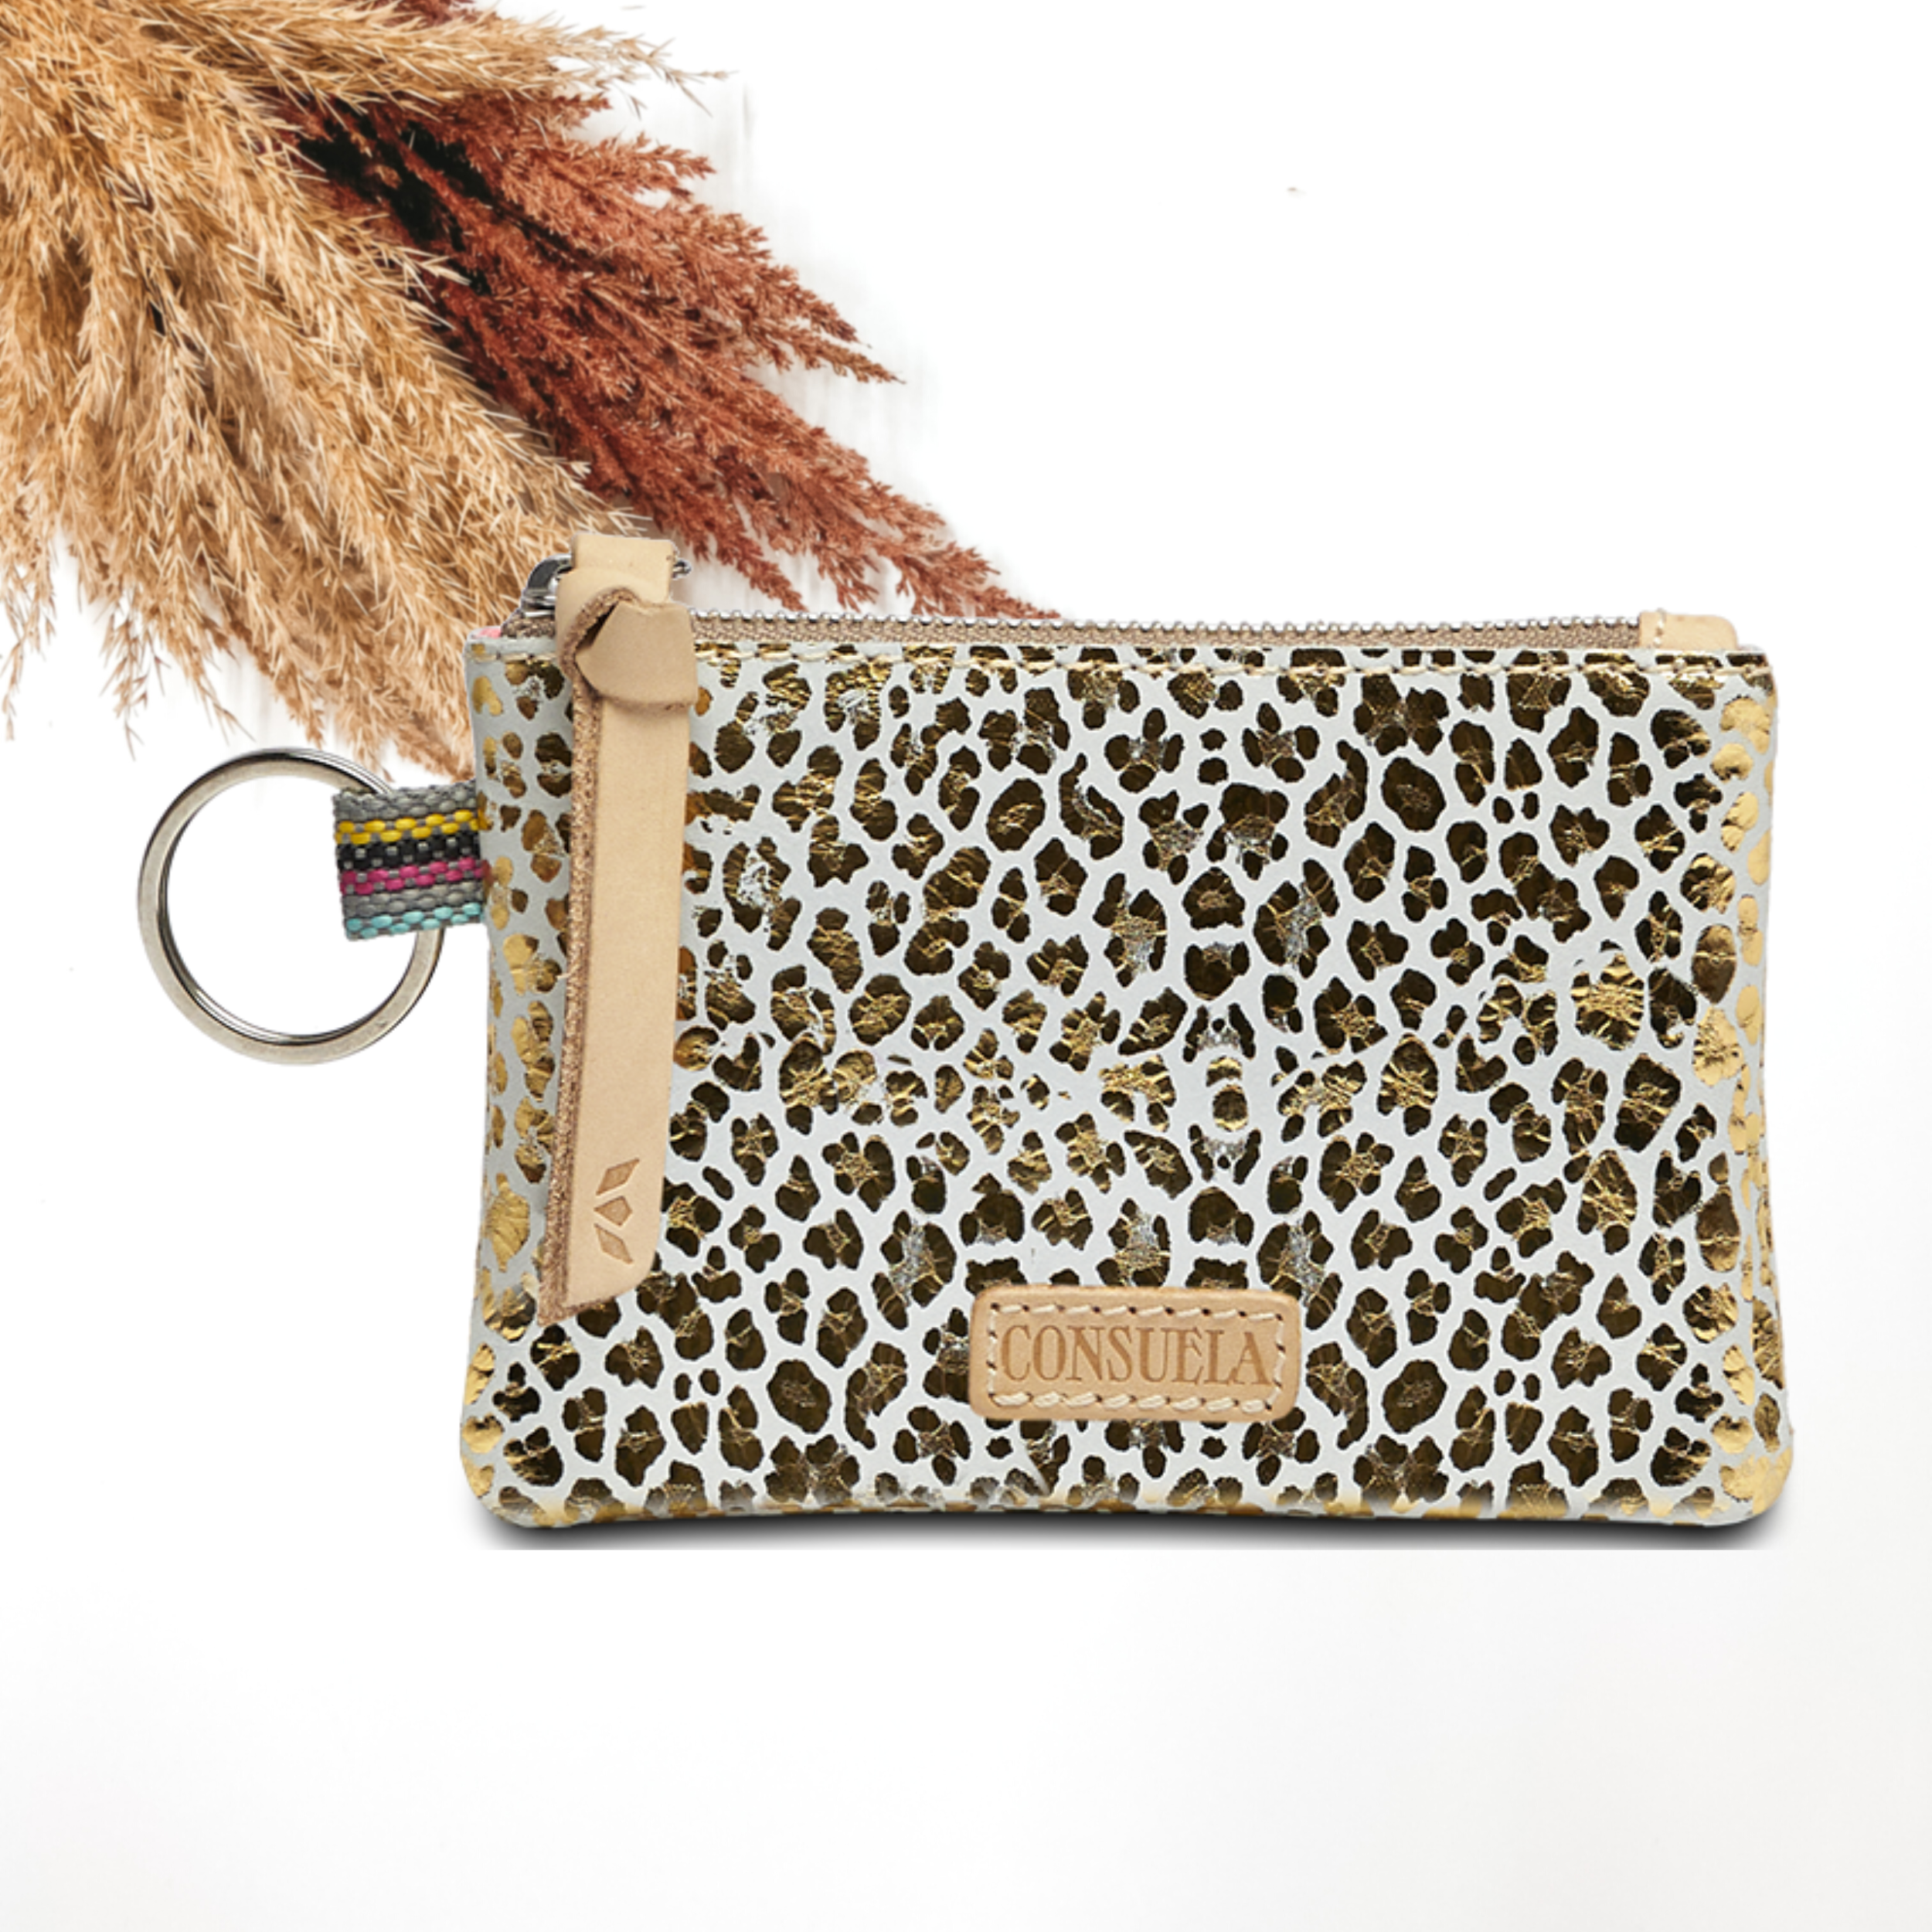 Charms Leopard Pattern Bag Shaped Keychains Pendant Car Wallet Key